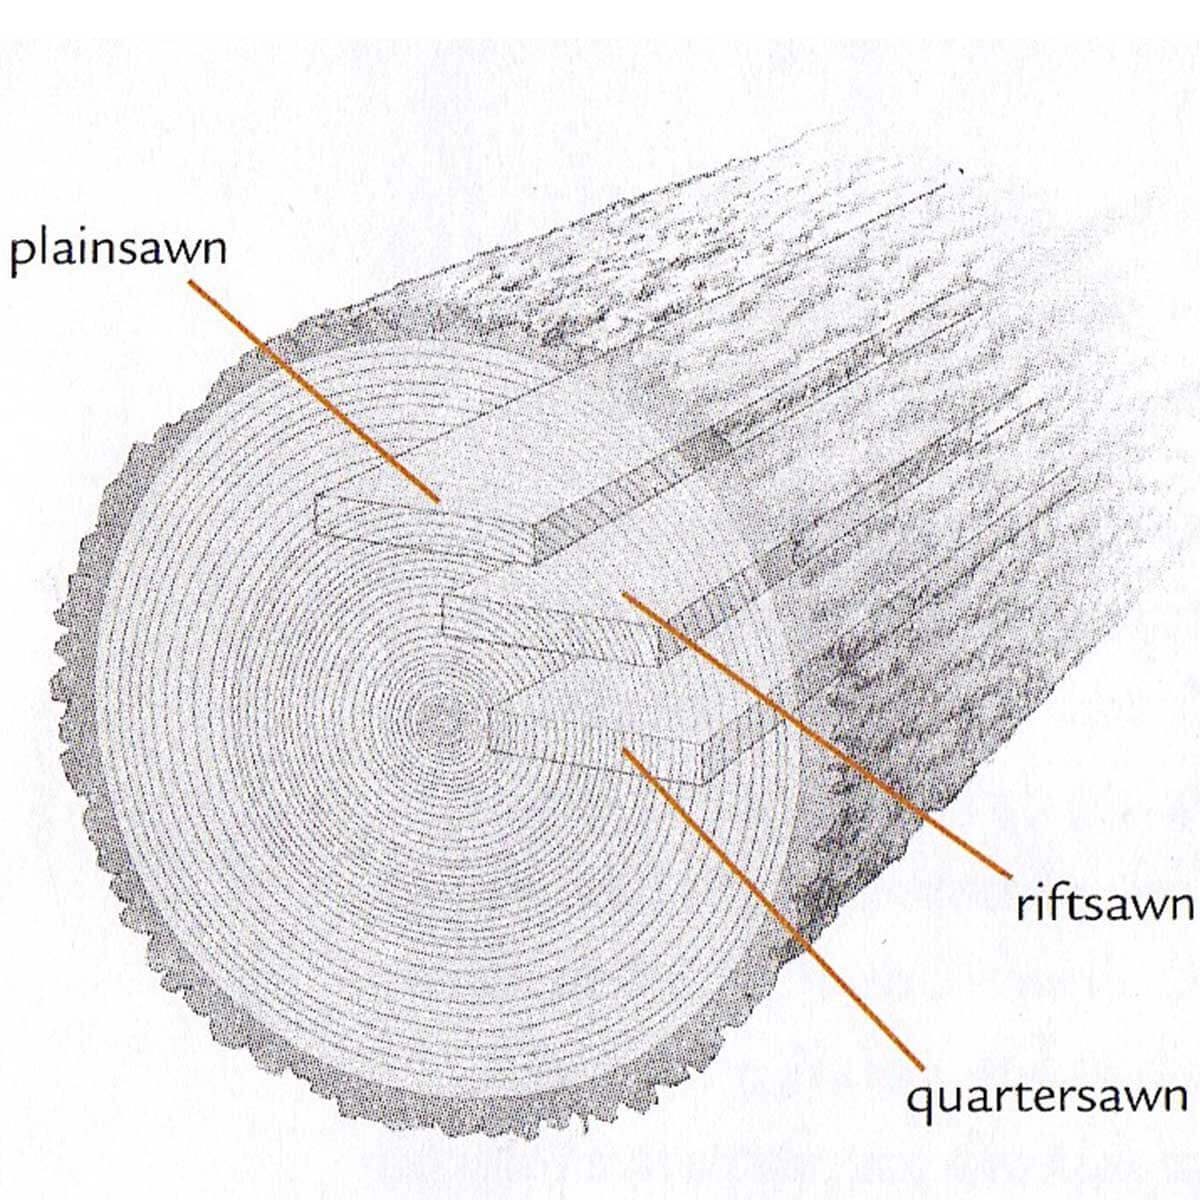 quarter-sawn wood illustration